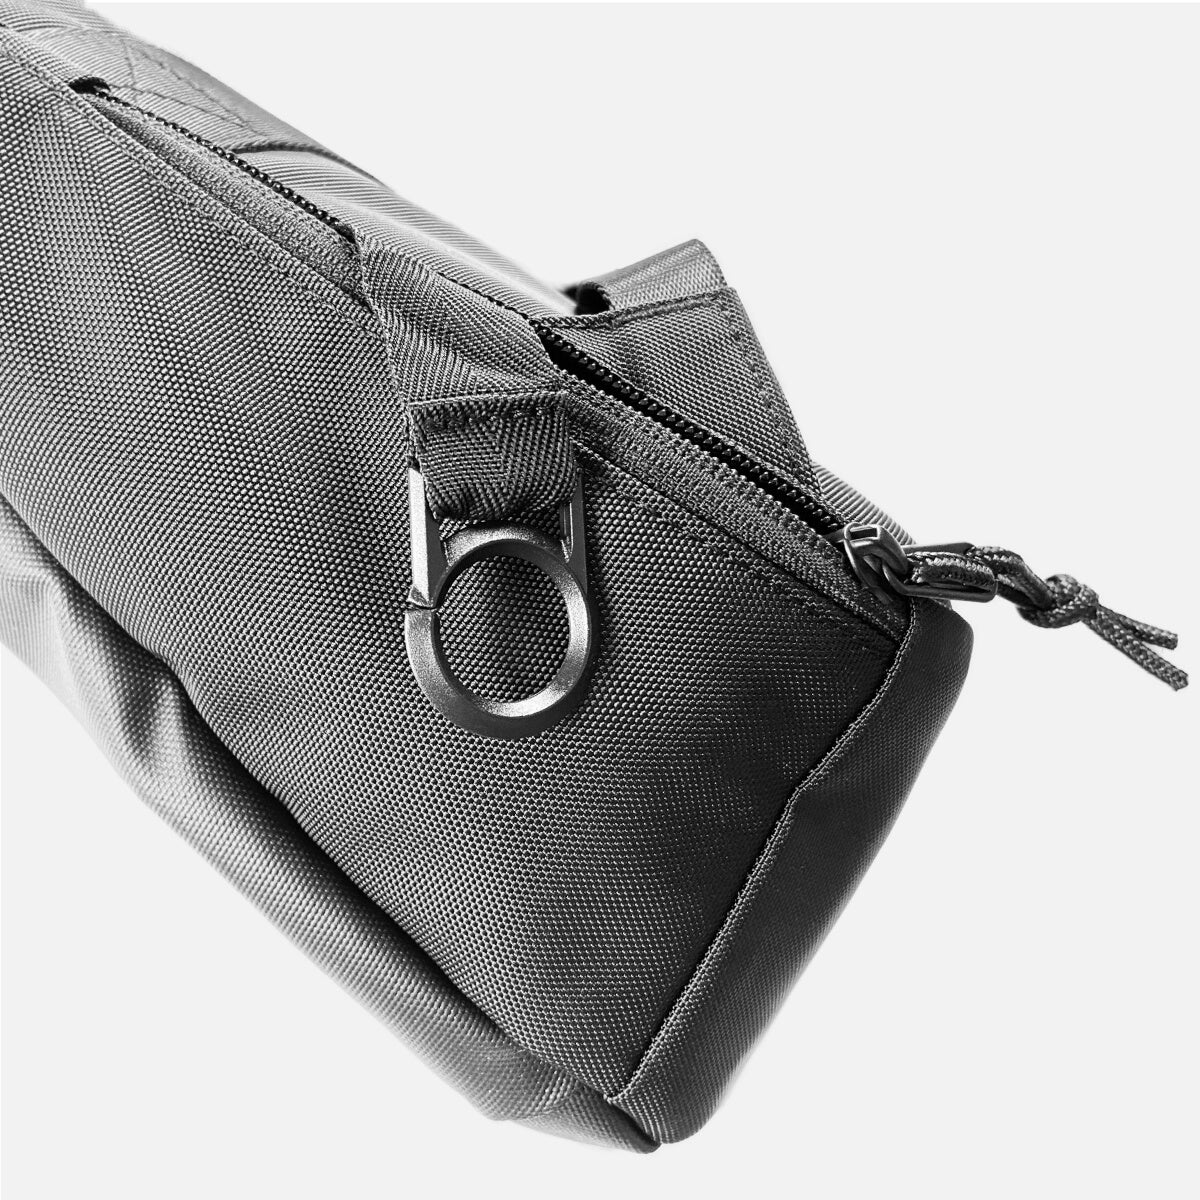 V-01 Minimalist Backpack